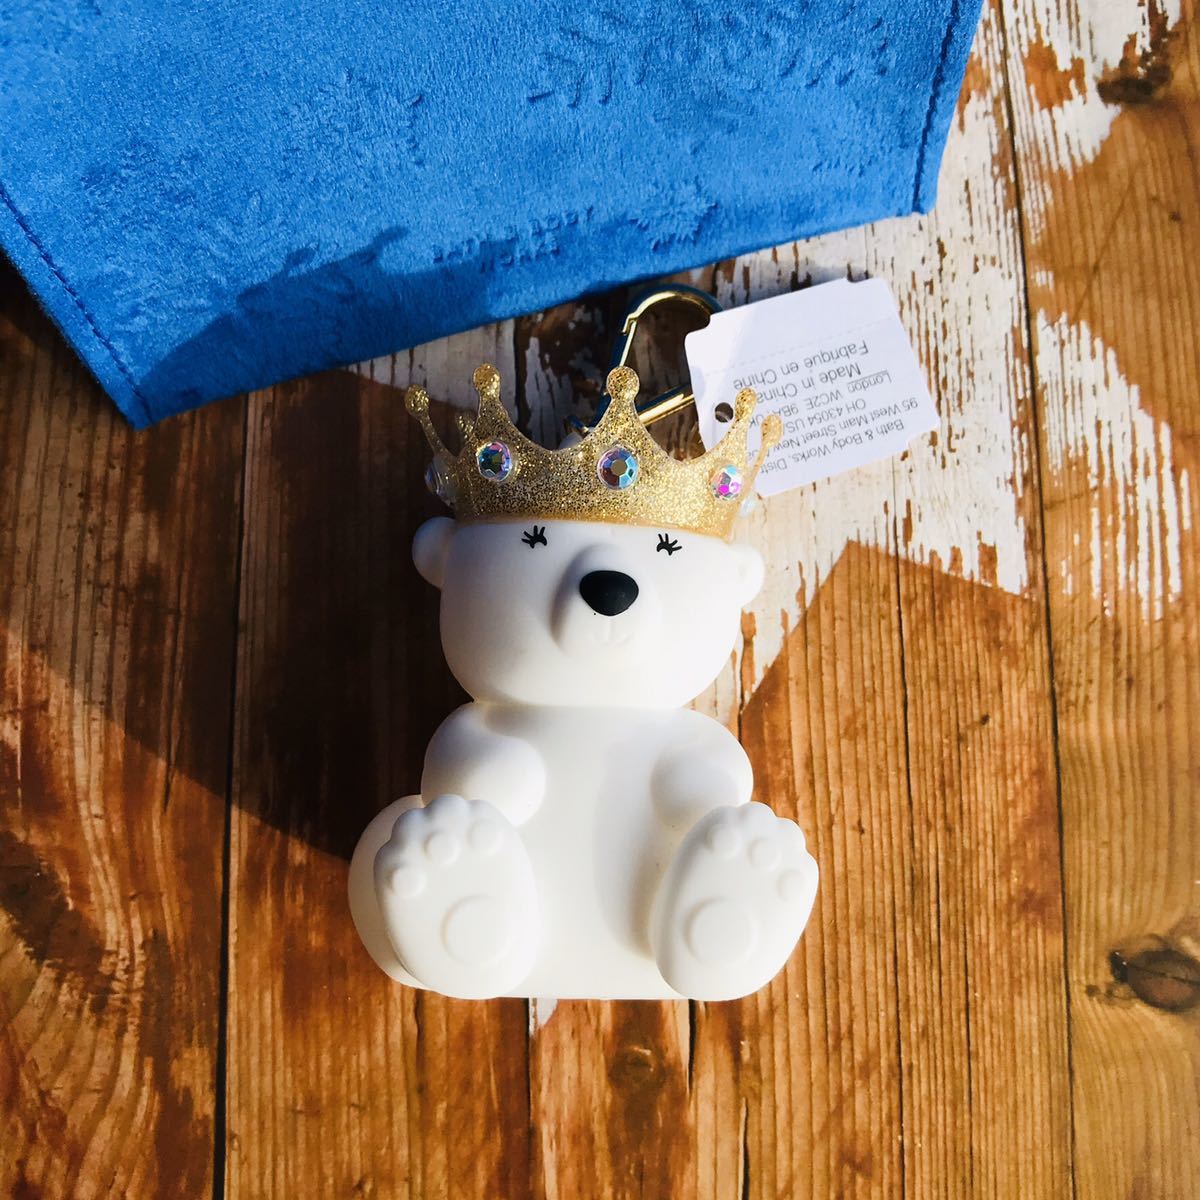 Bath & Body Works Royal Polar Bear pocketbac держатель  купить по цене 598.65 р